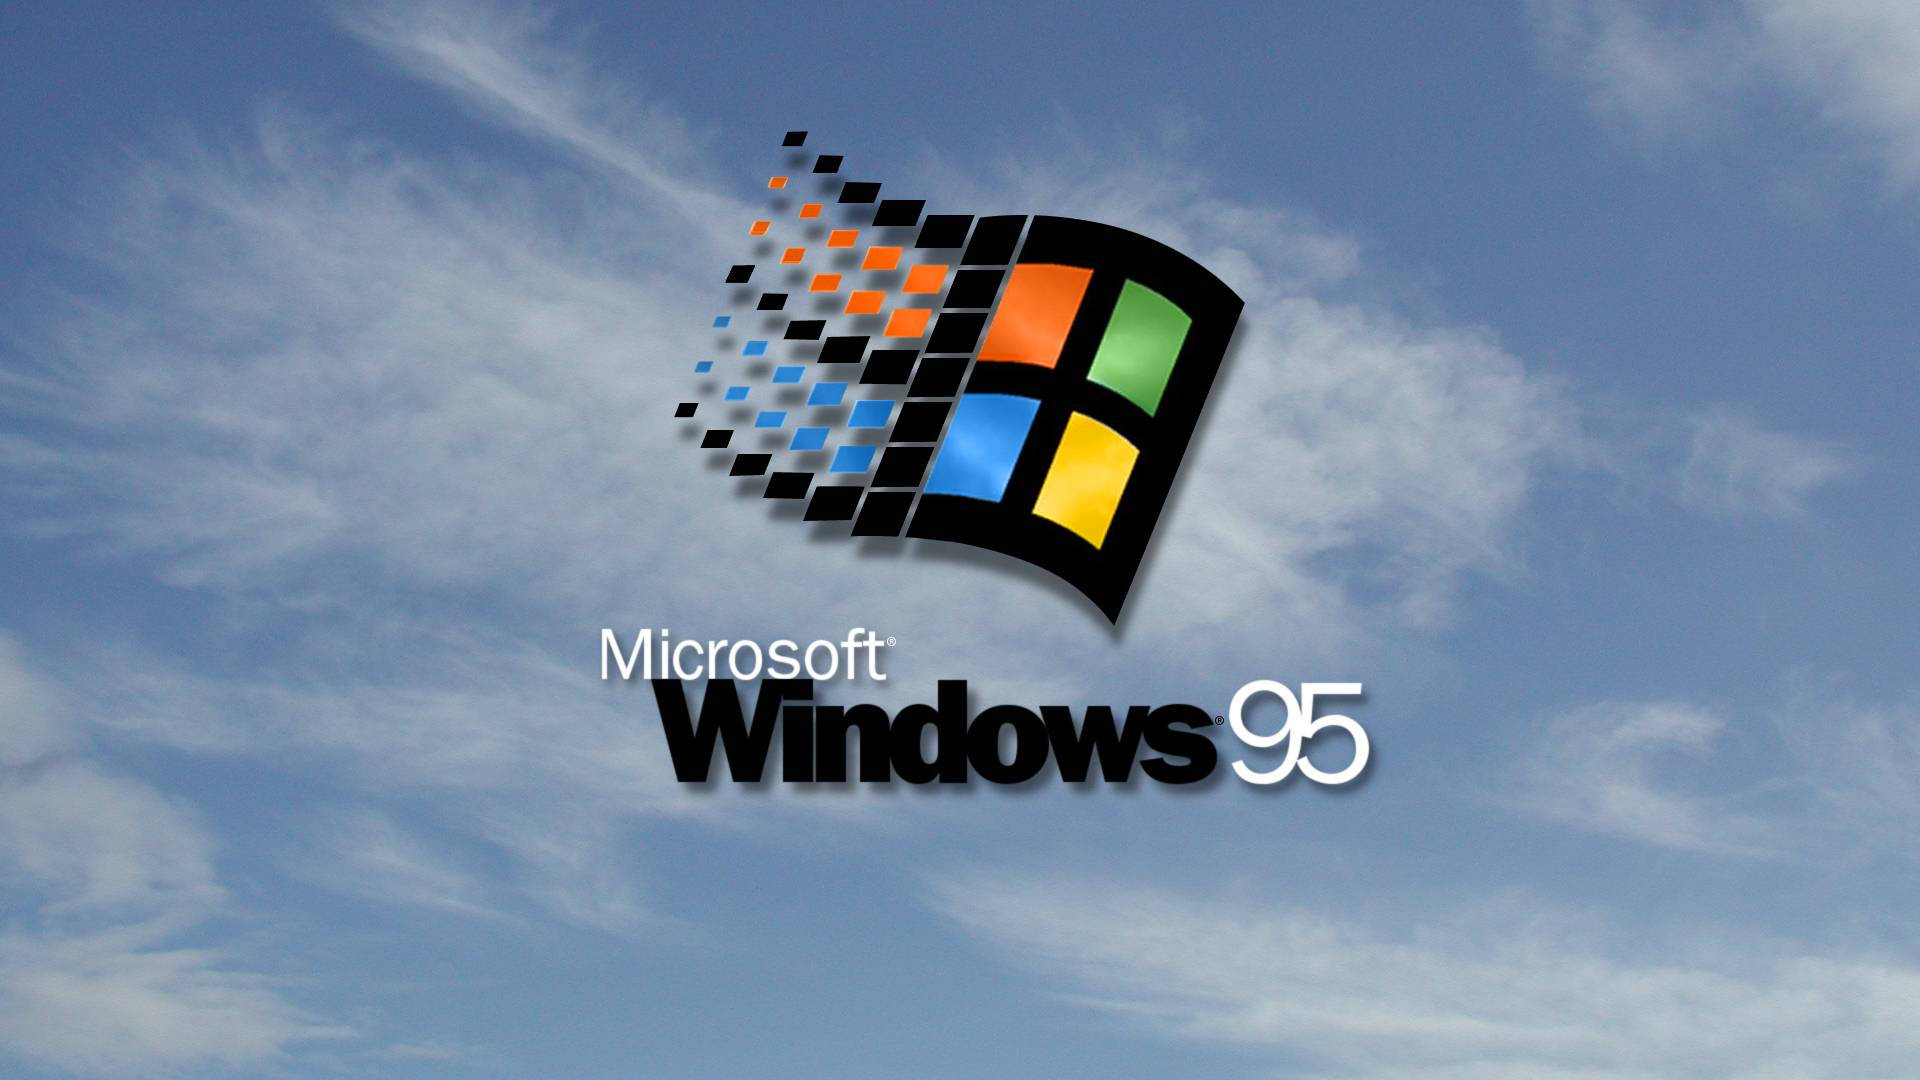 Top 999+ Windows 95 Wallpaper Full HD, 4K✅Free to Use